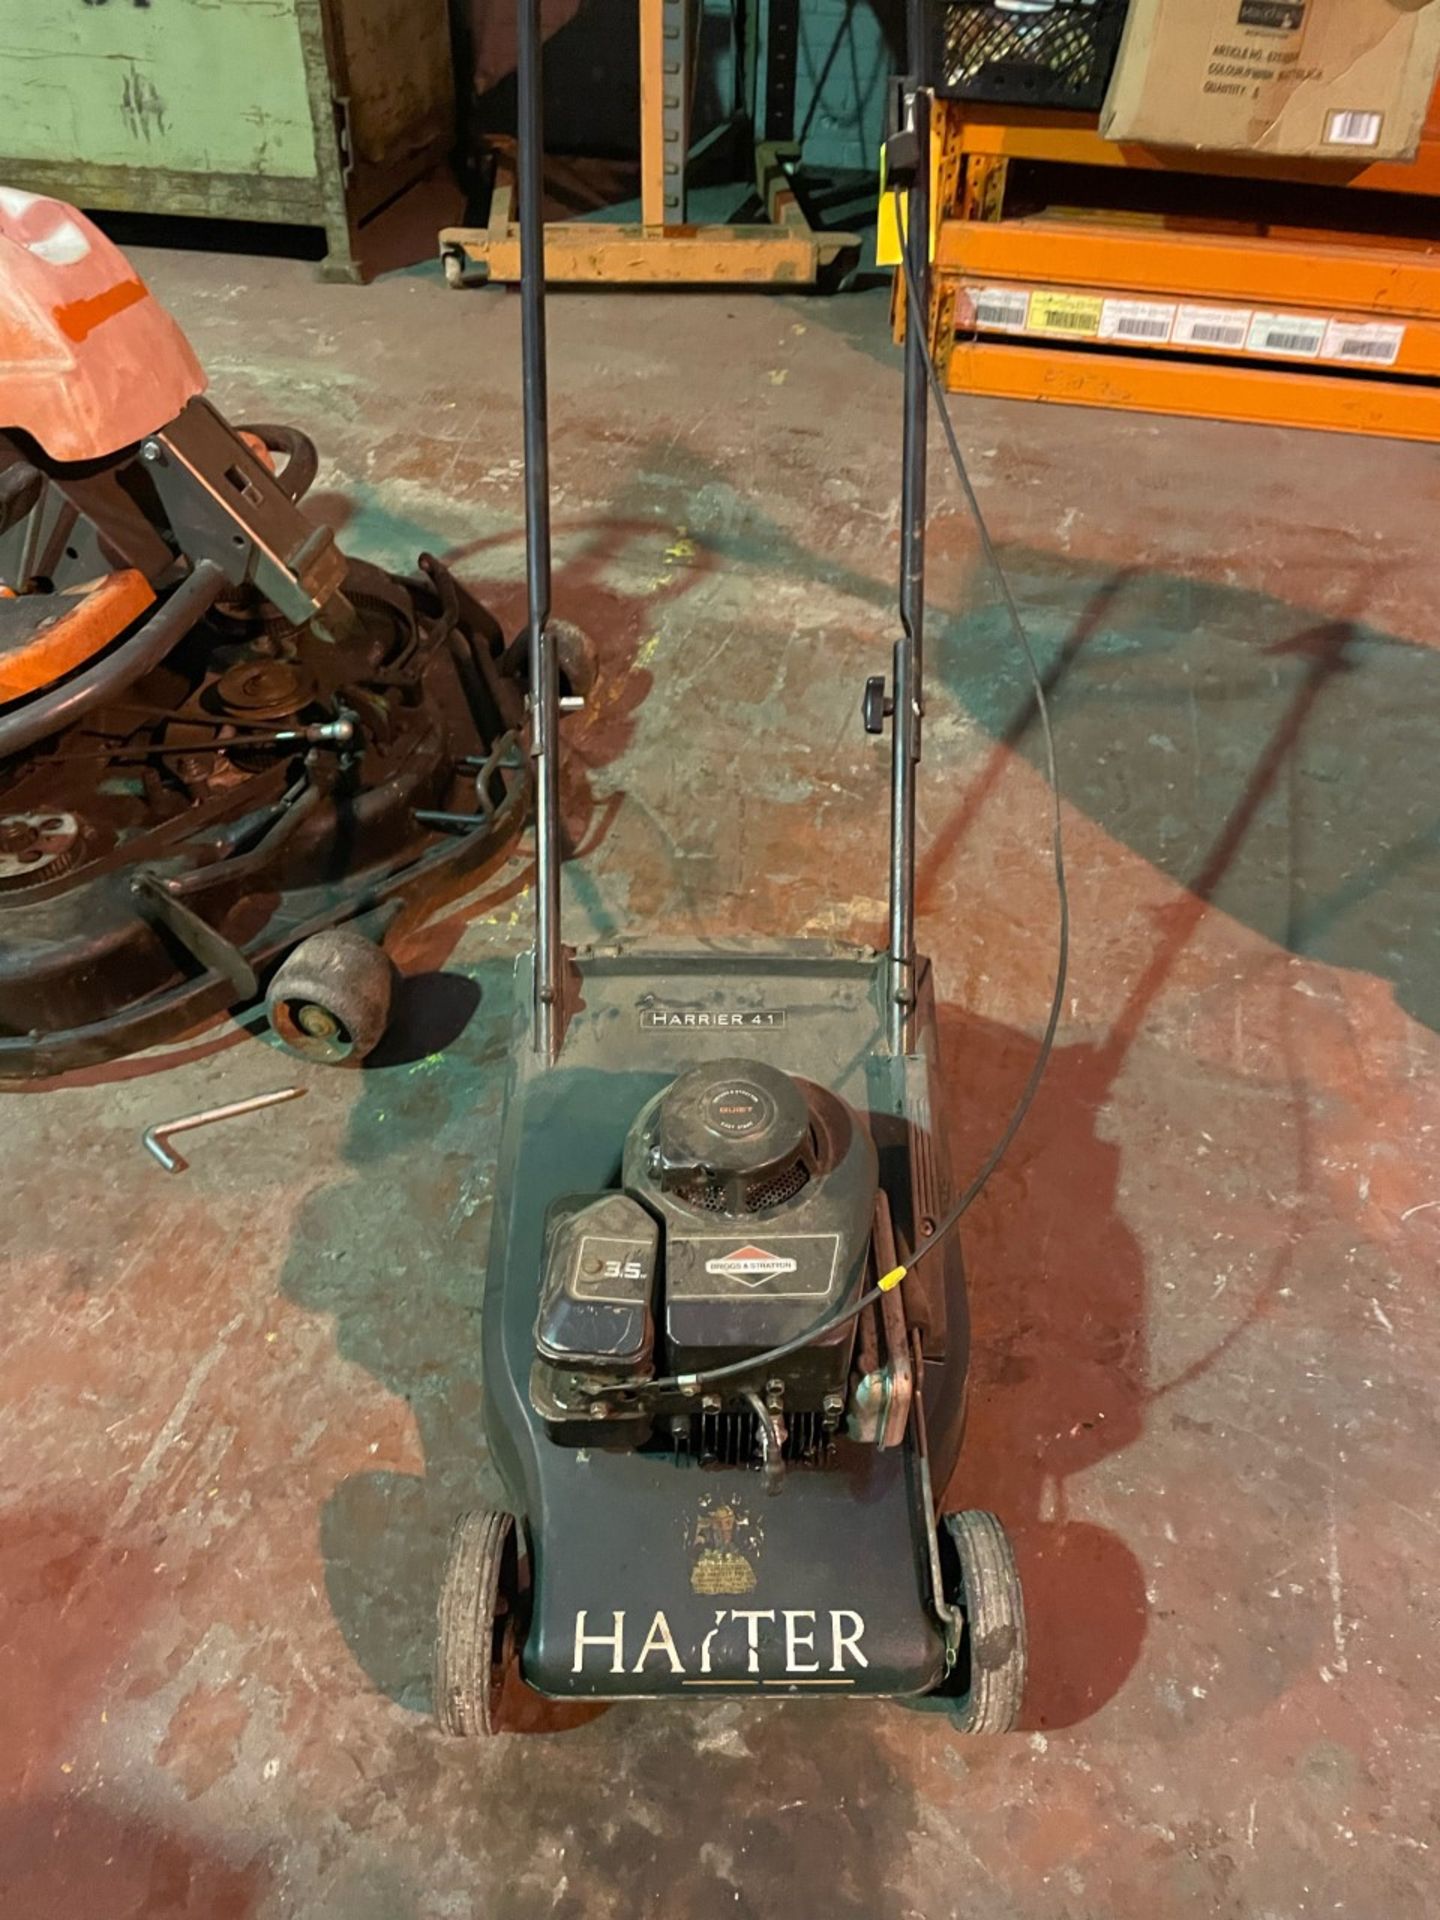 Hayter harrier 41. 2.5hp engine needs new pull cord